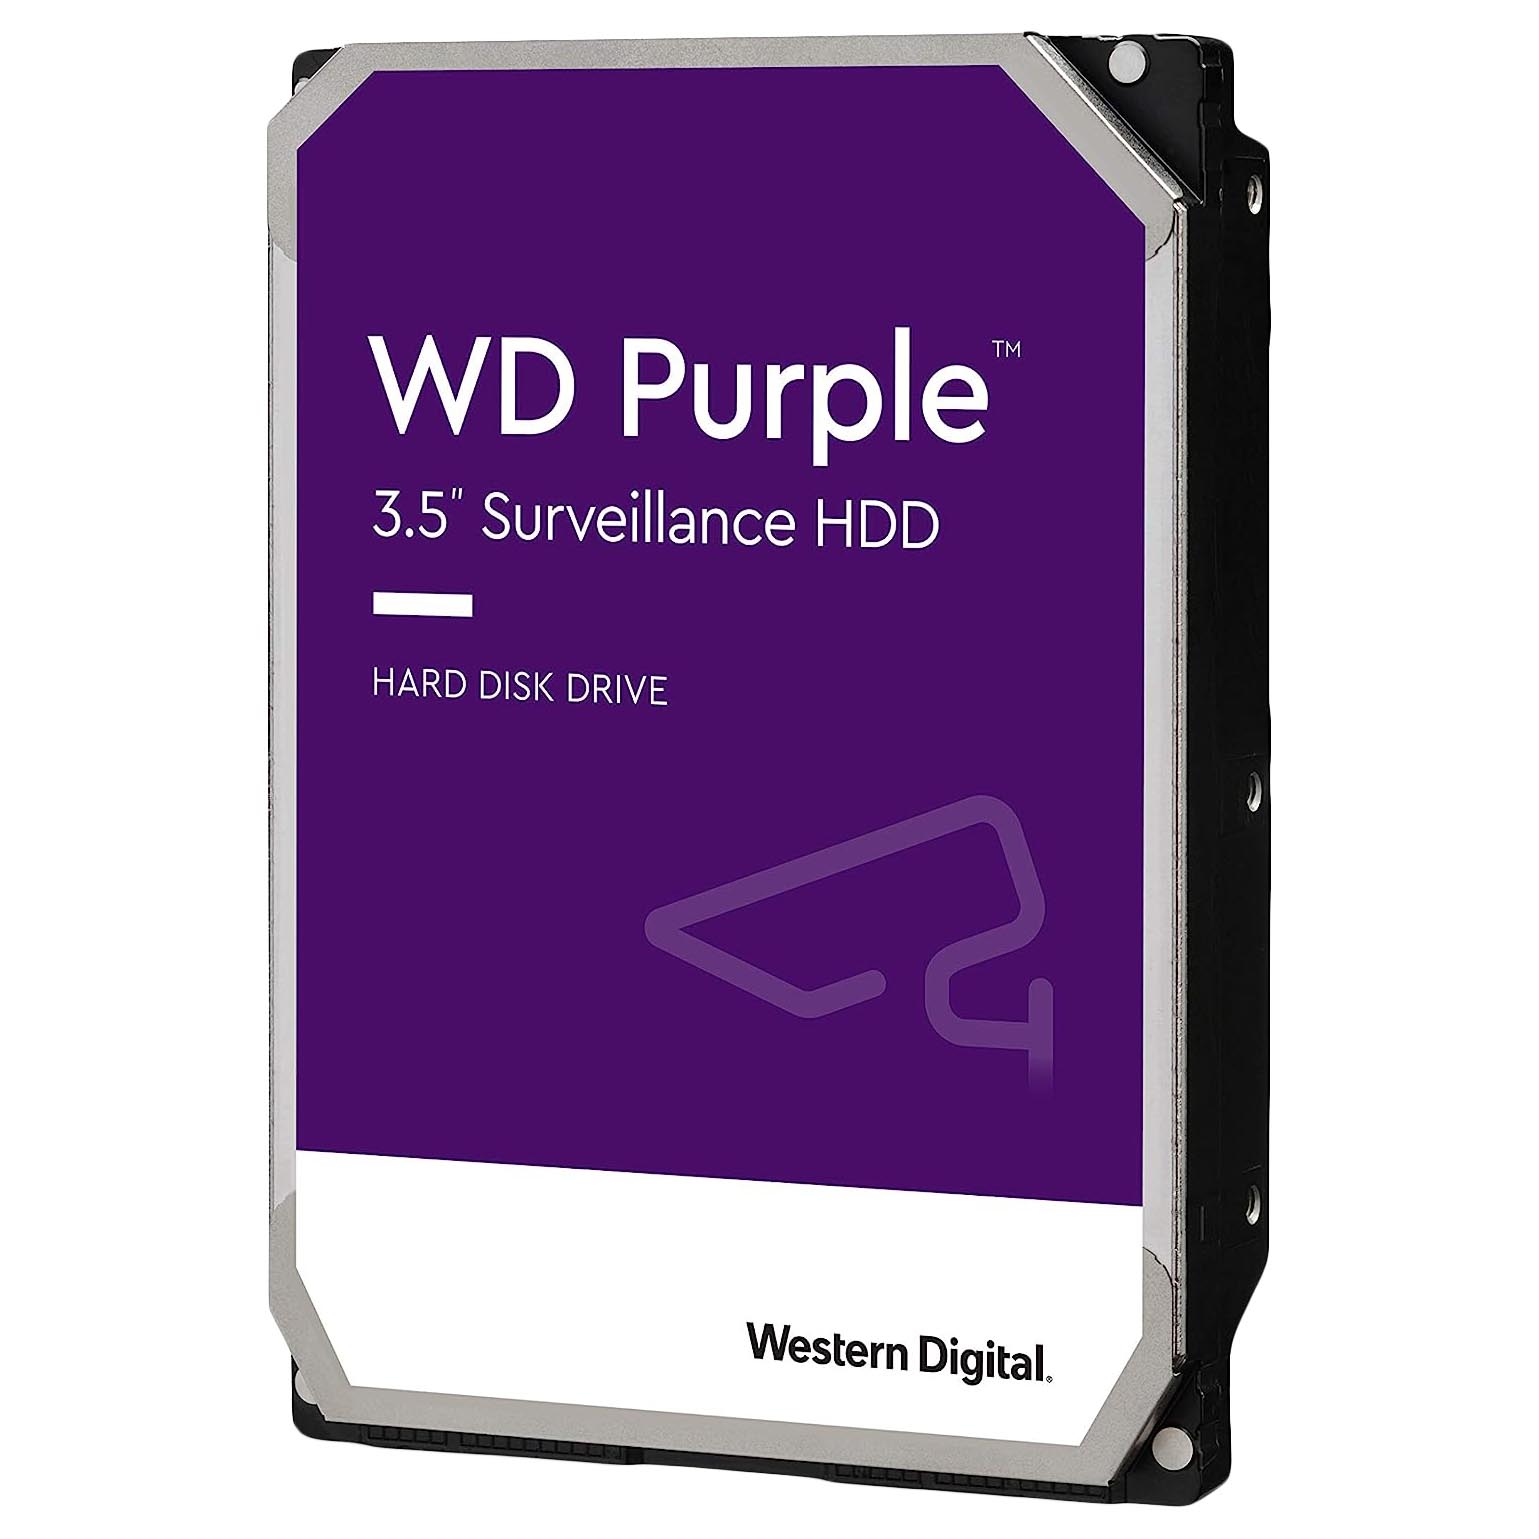 Внутренний жесткий диск Western Digital WD Purple Surveillance, WD43PURZ, 4Тб жесткий диск western digital wd purple surveillance 4tb 3 5 wd40purz